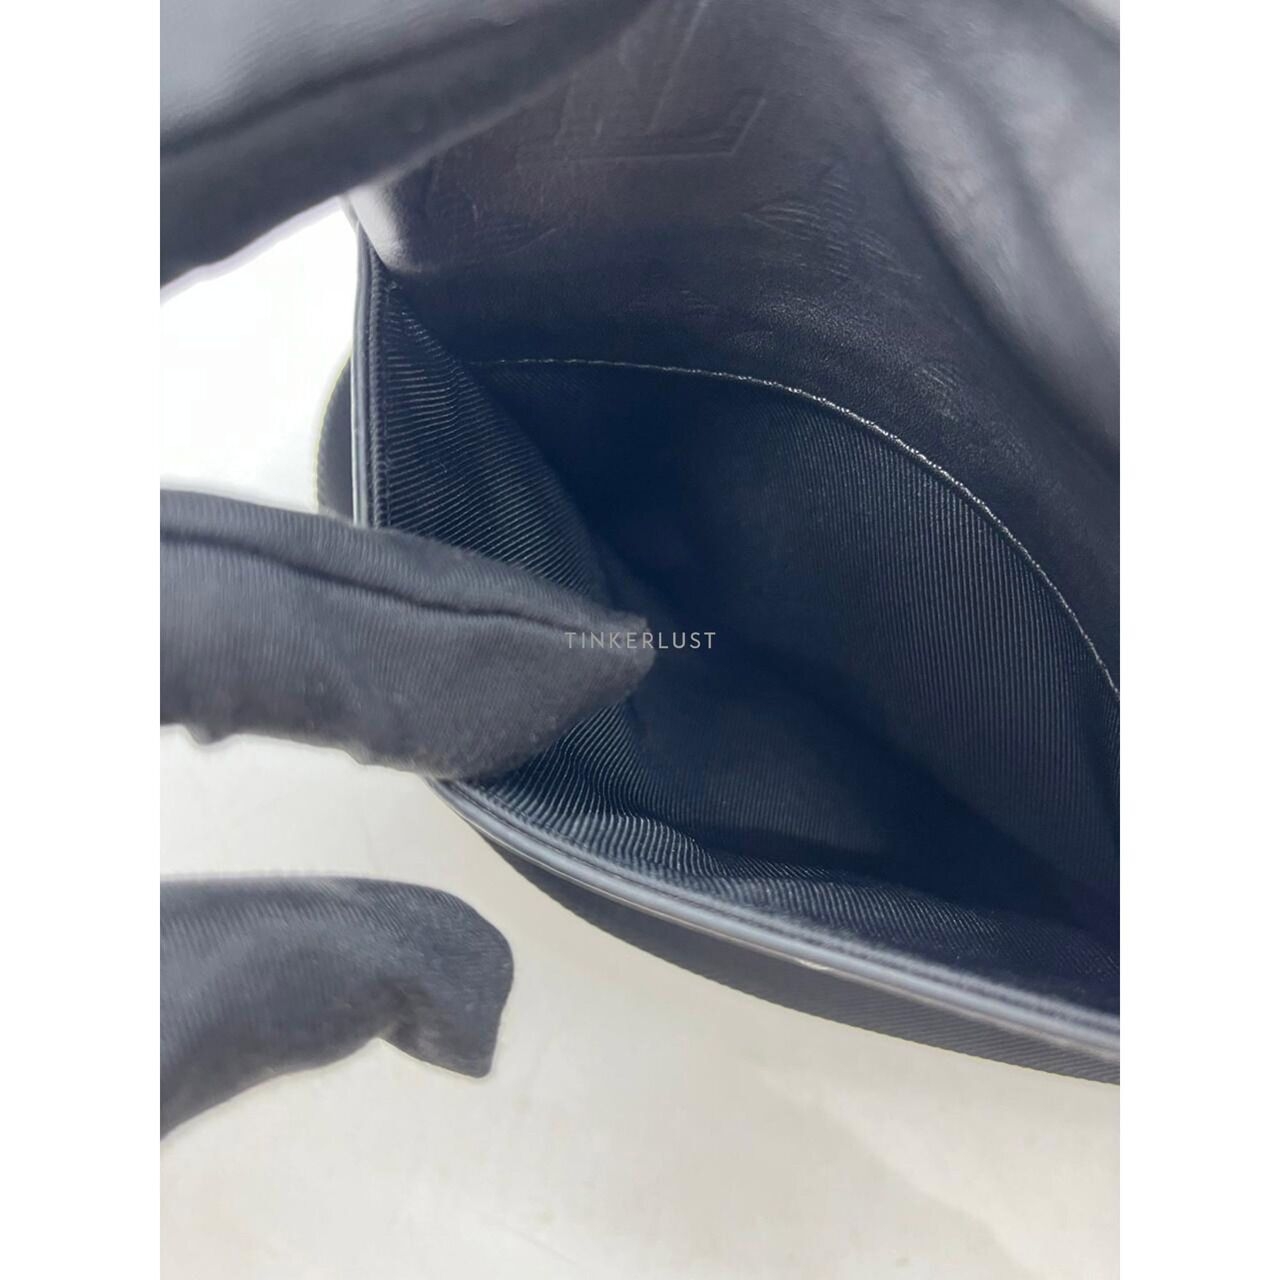 Louis Vuitton Black Shadow 2018 Slign Bag